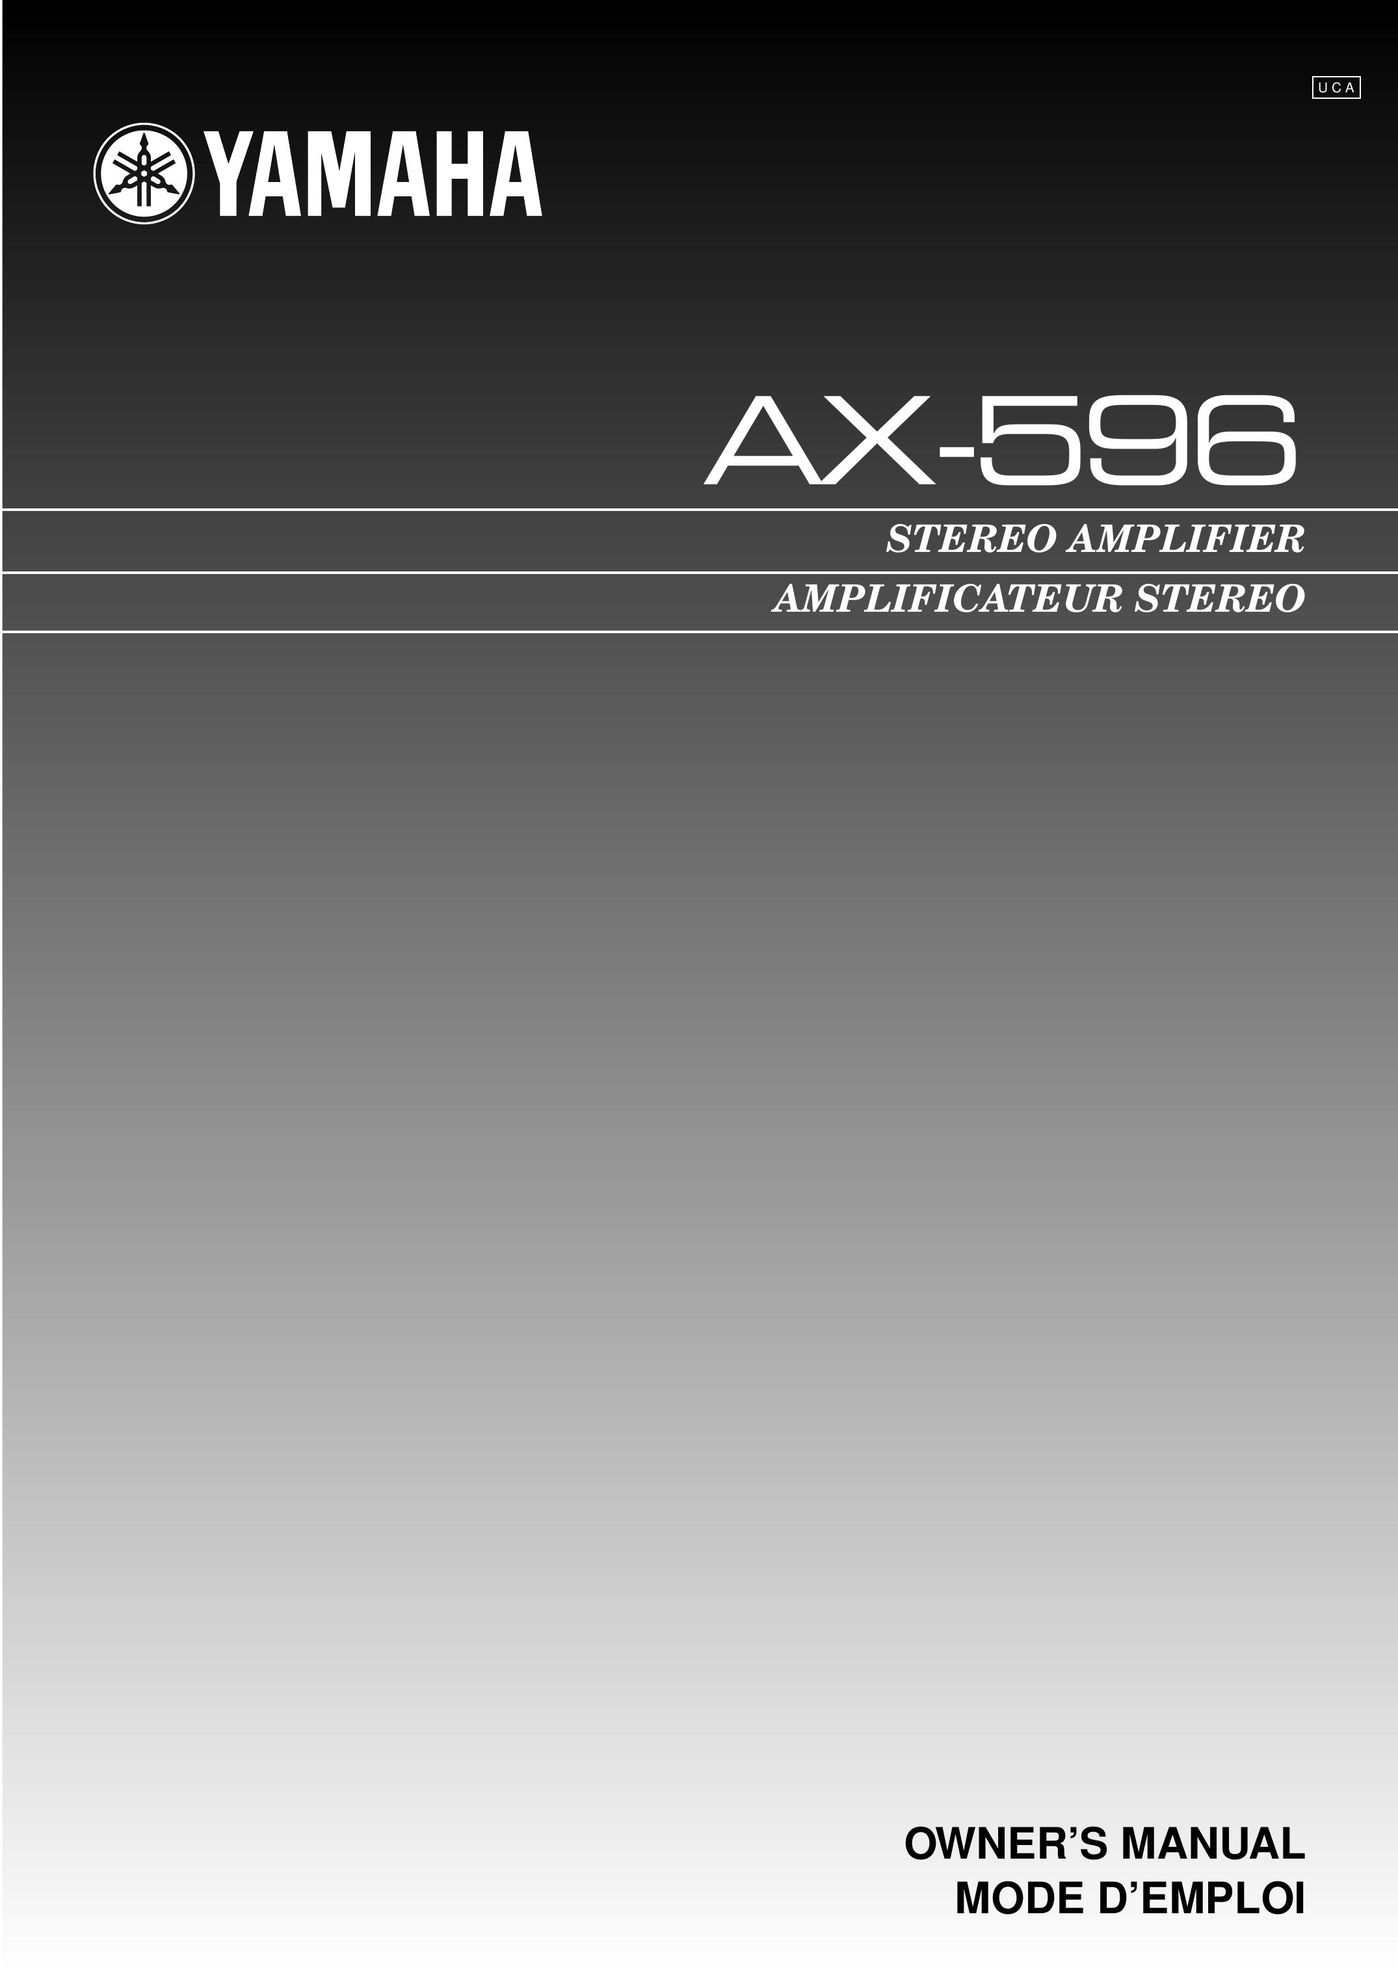 Yamaha AX-596 Stereo Amplifier User Manual